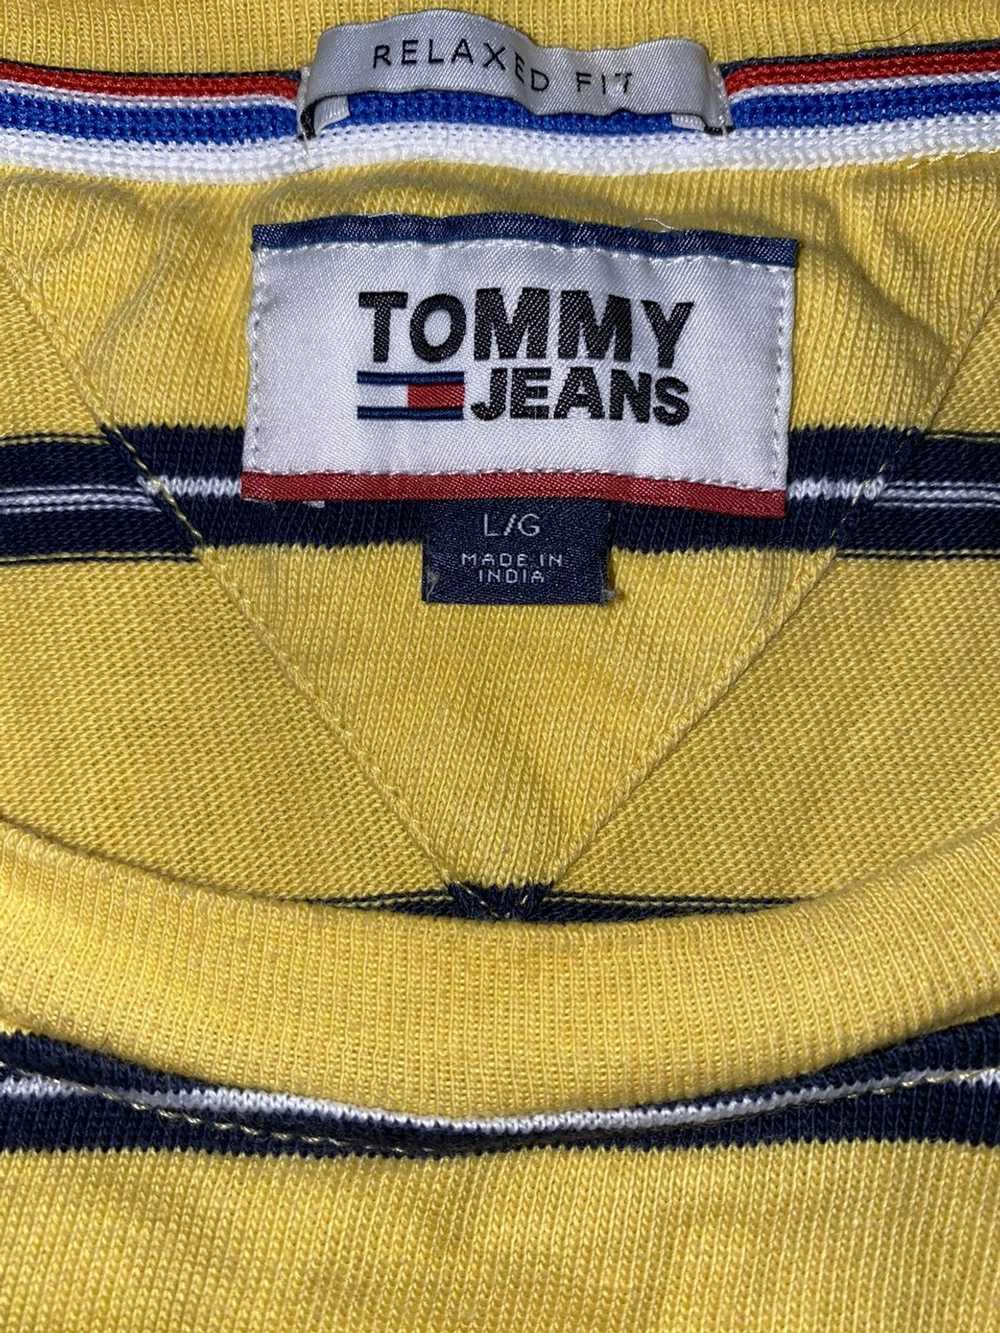 Tommy Jeans Vintage Tommy Jeans Shirt - image 4